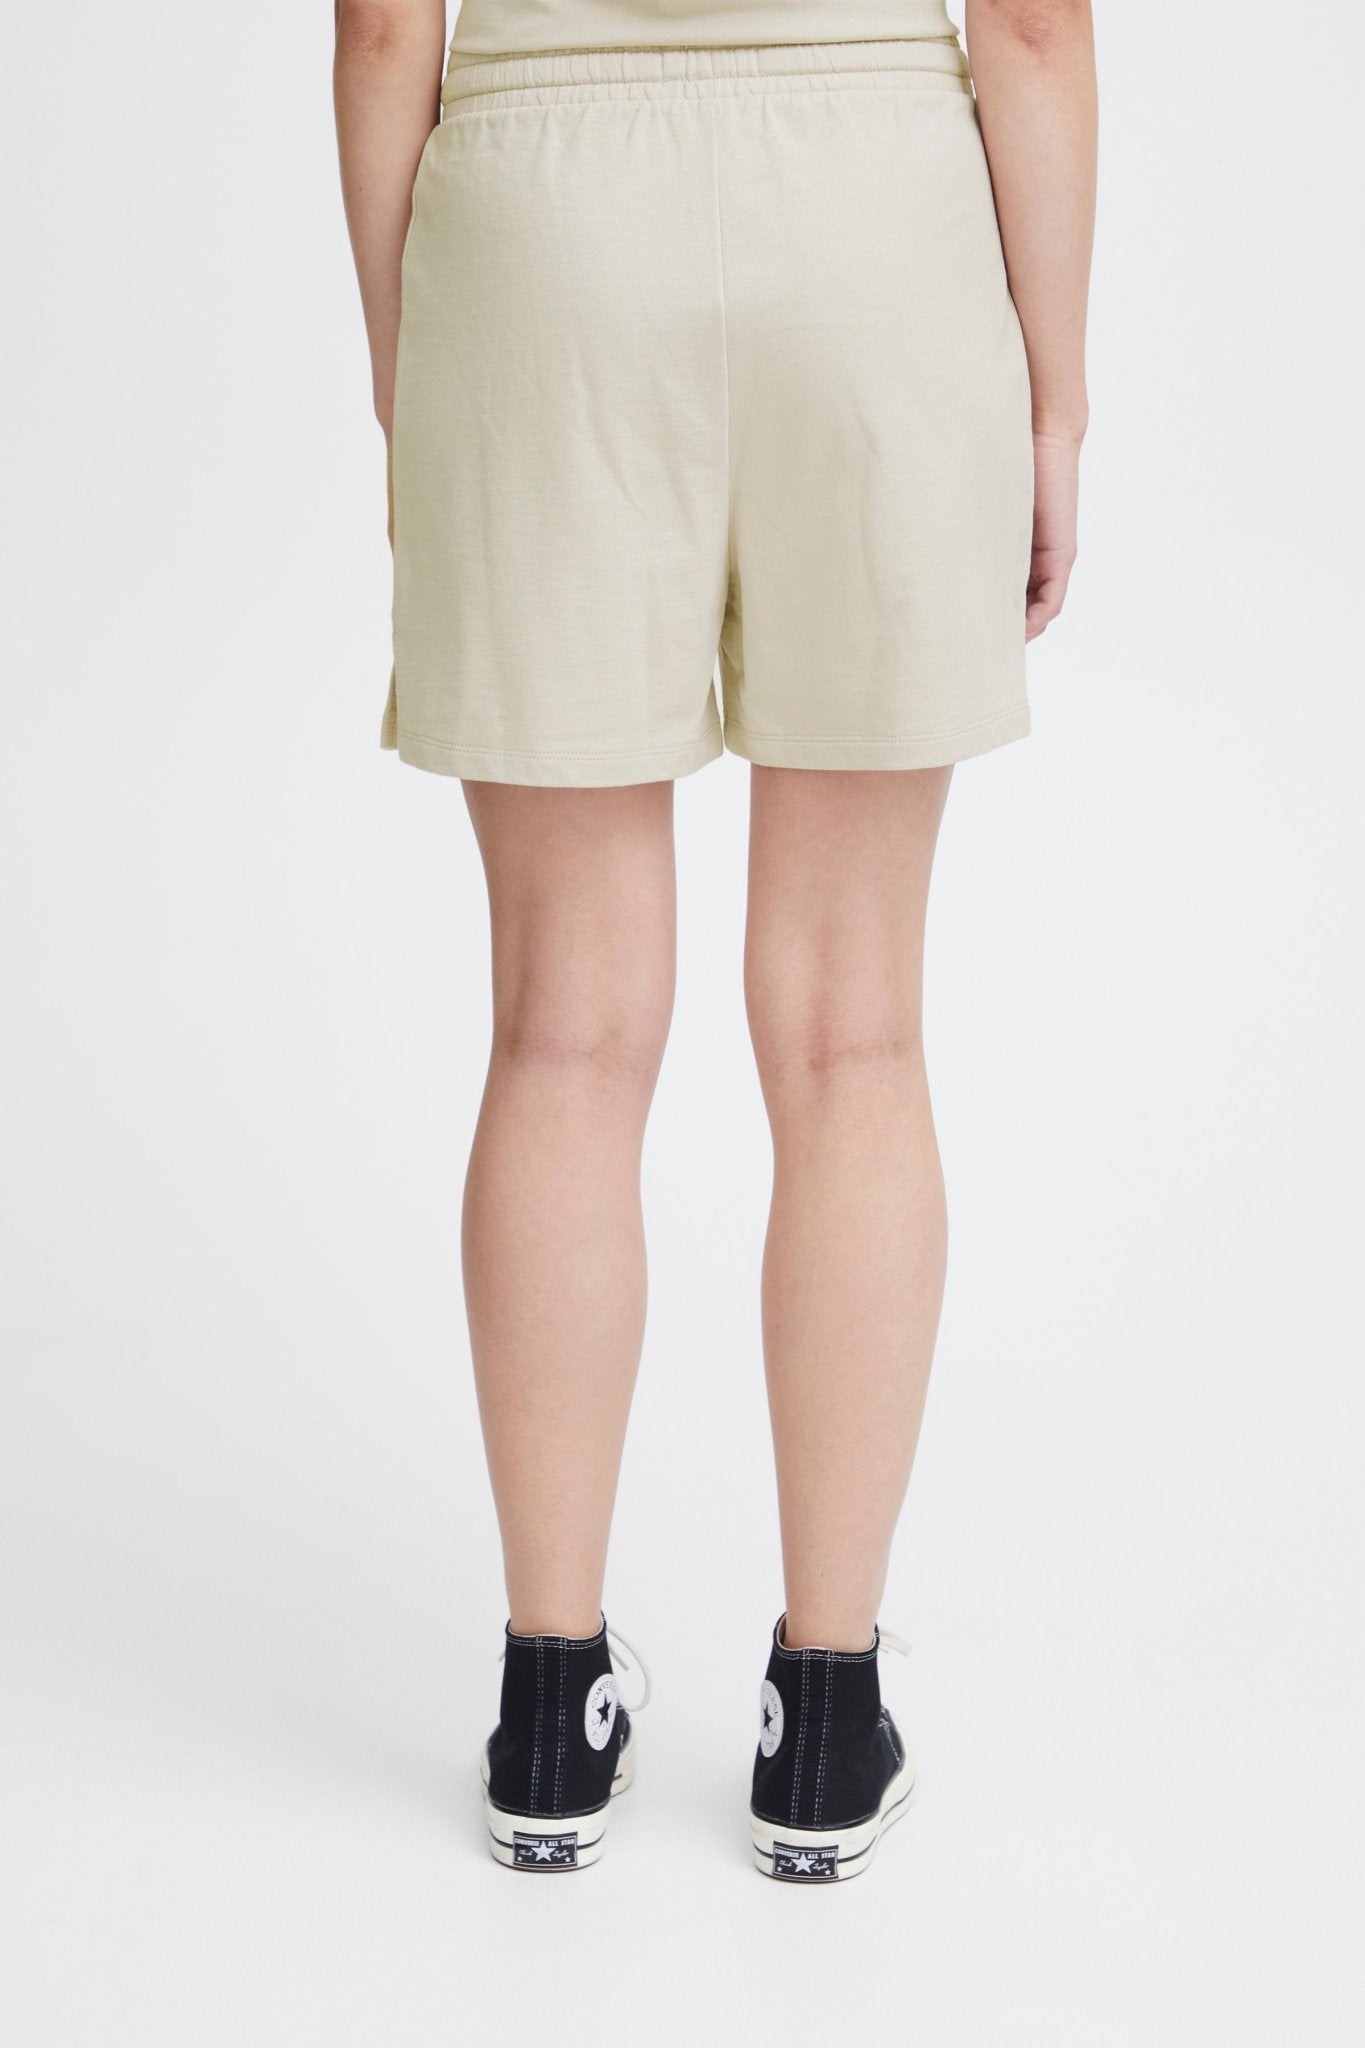 Ocie fleece shorts by Ichi - silver gray - Blue Sky Fashions & Lingerie